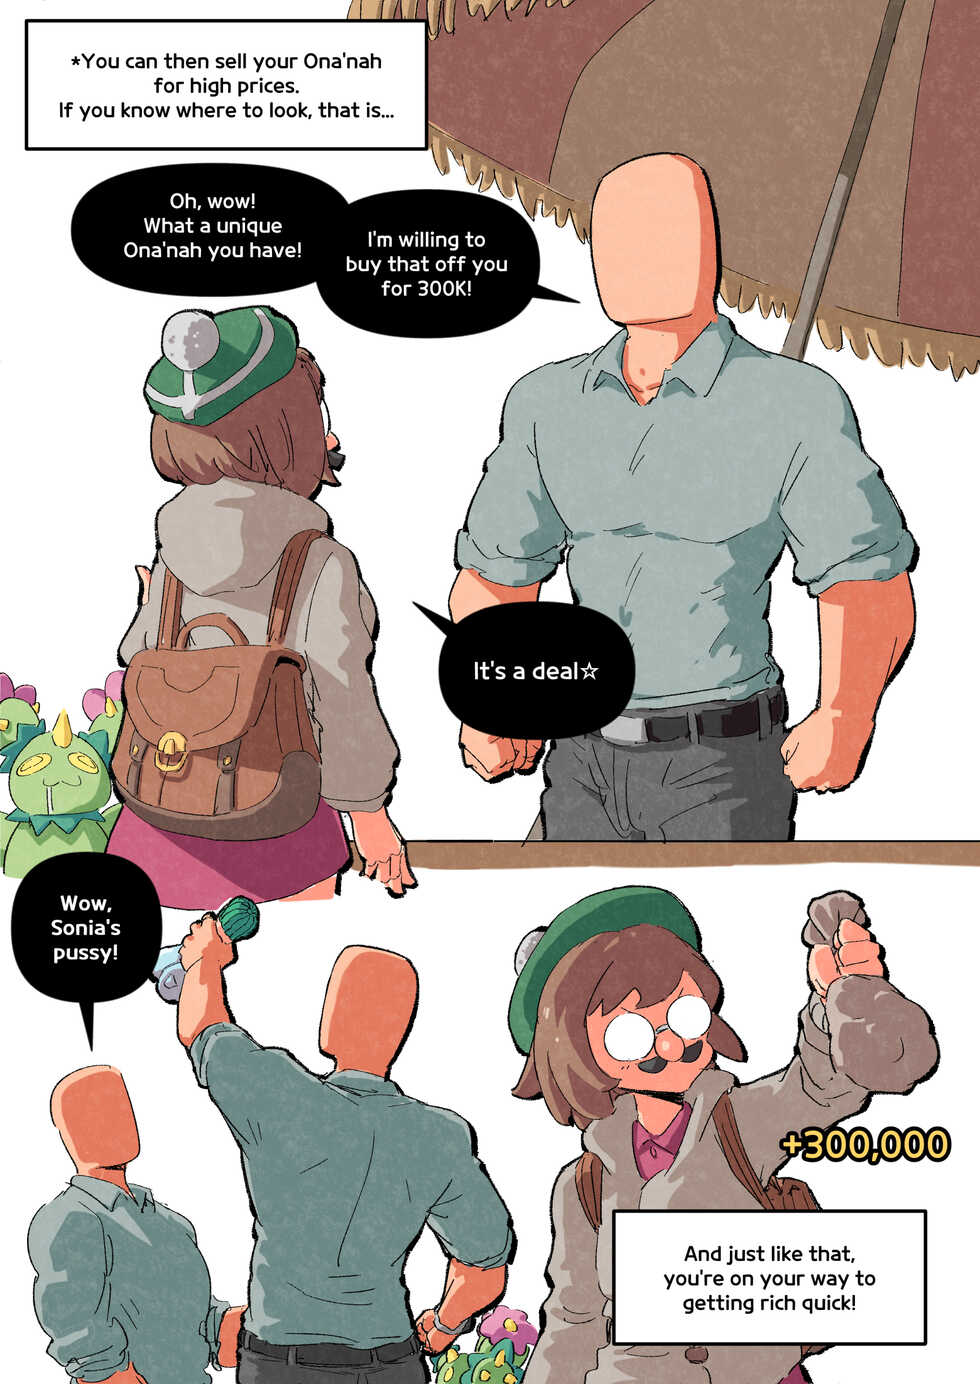 [Woomochichi] Introducing! Gallar's new Pokemon, Ona'nah! - Page 5